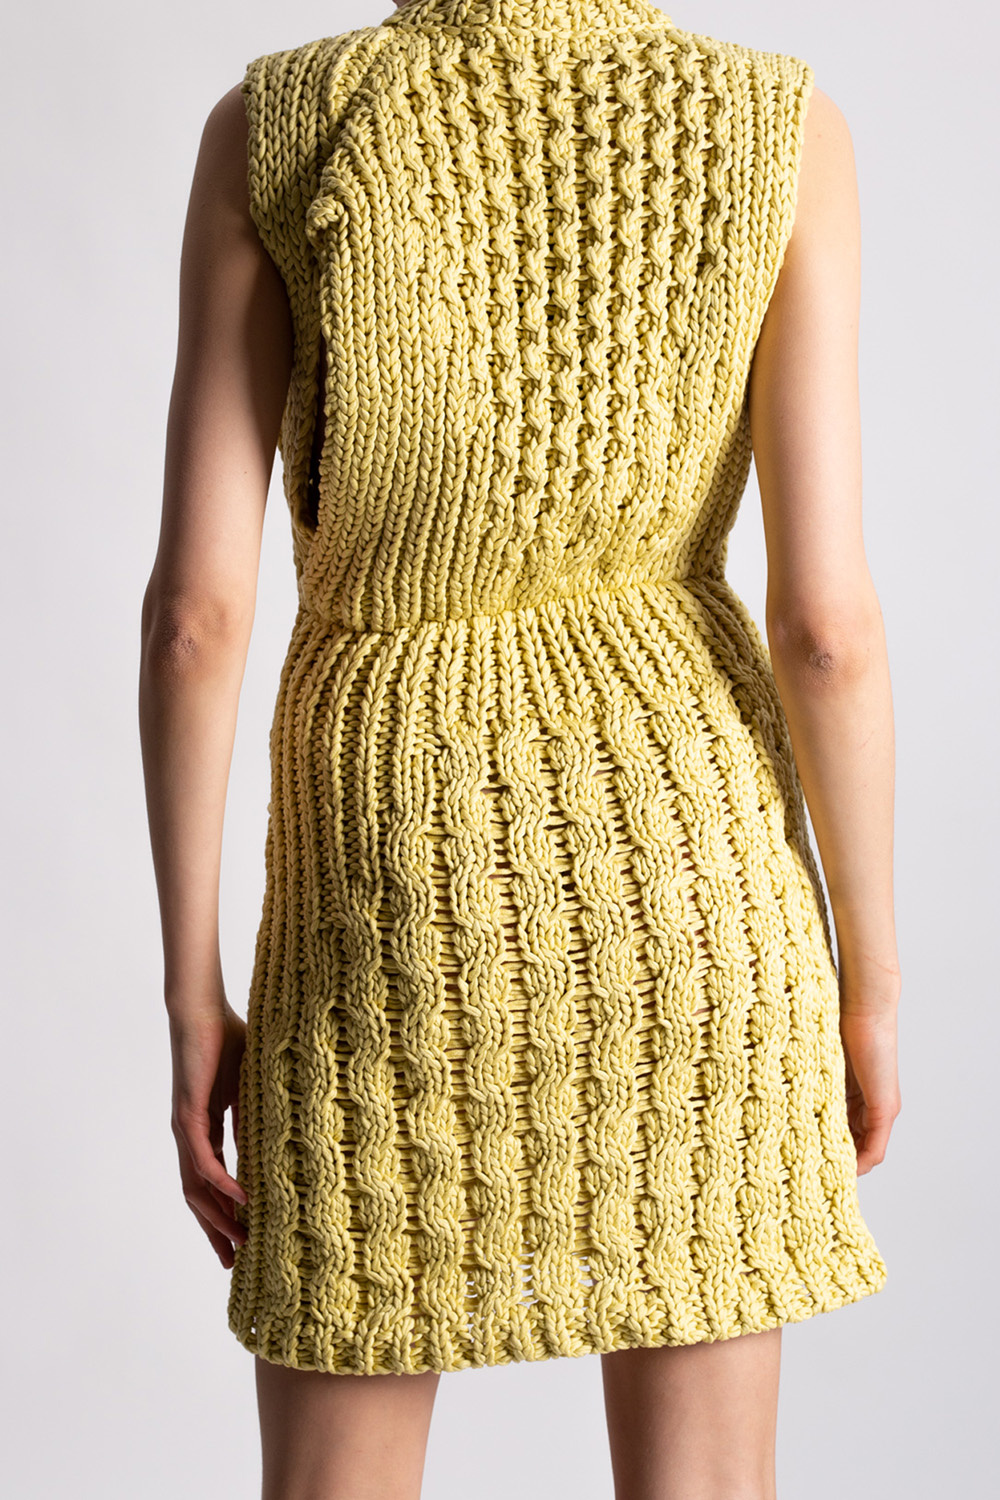 Salvatore Ferragamo Knitted dress